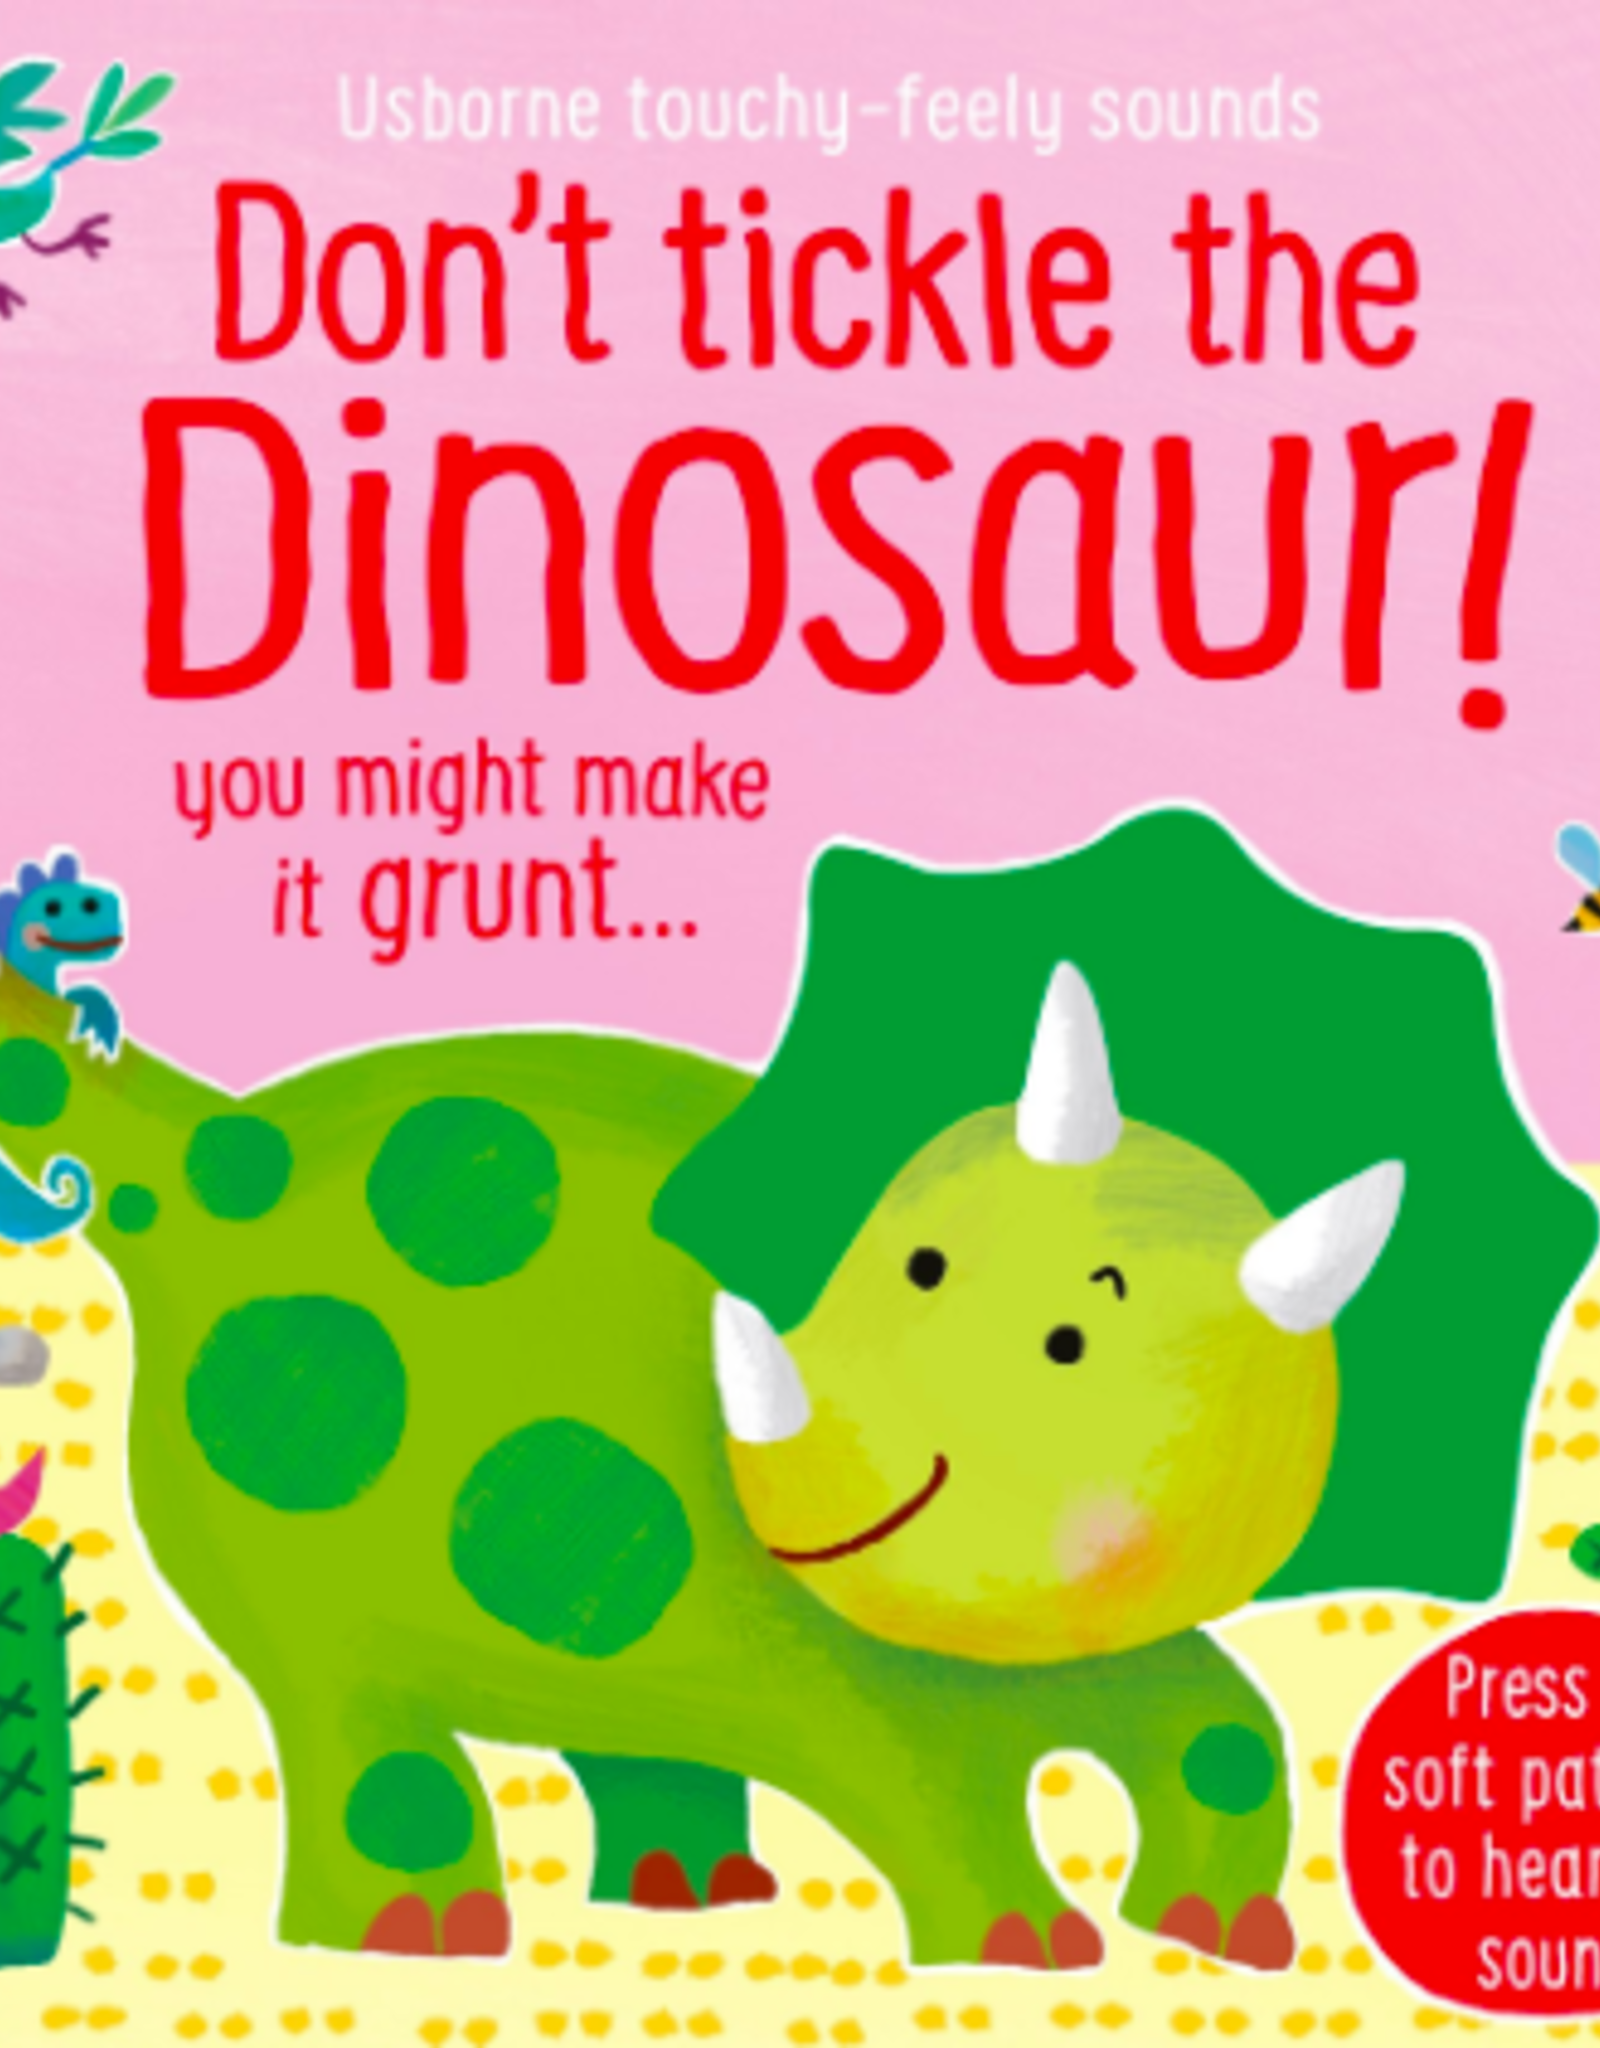 Usborne Don't Tickle the Dinosaur!